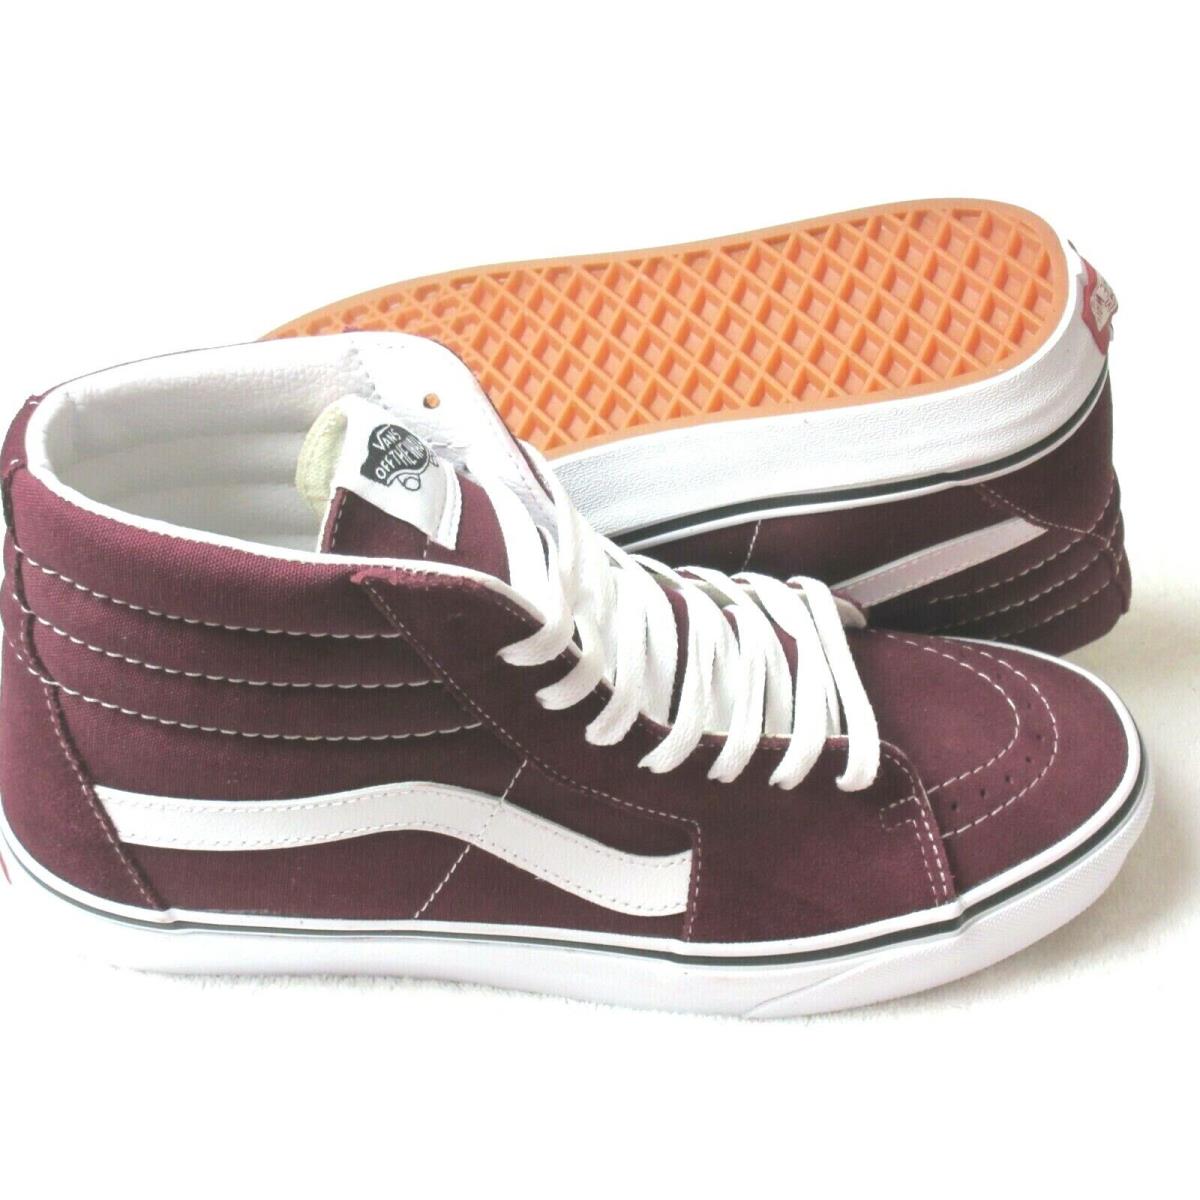 Vans Mens Sk8-Hi Port Royale Red True White Canvas Suede Skate Shoes Size 10